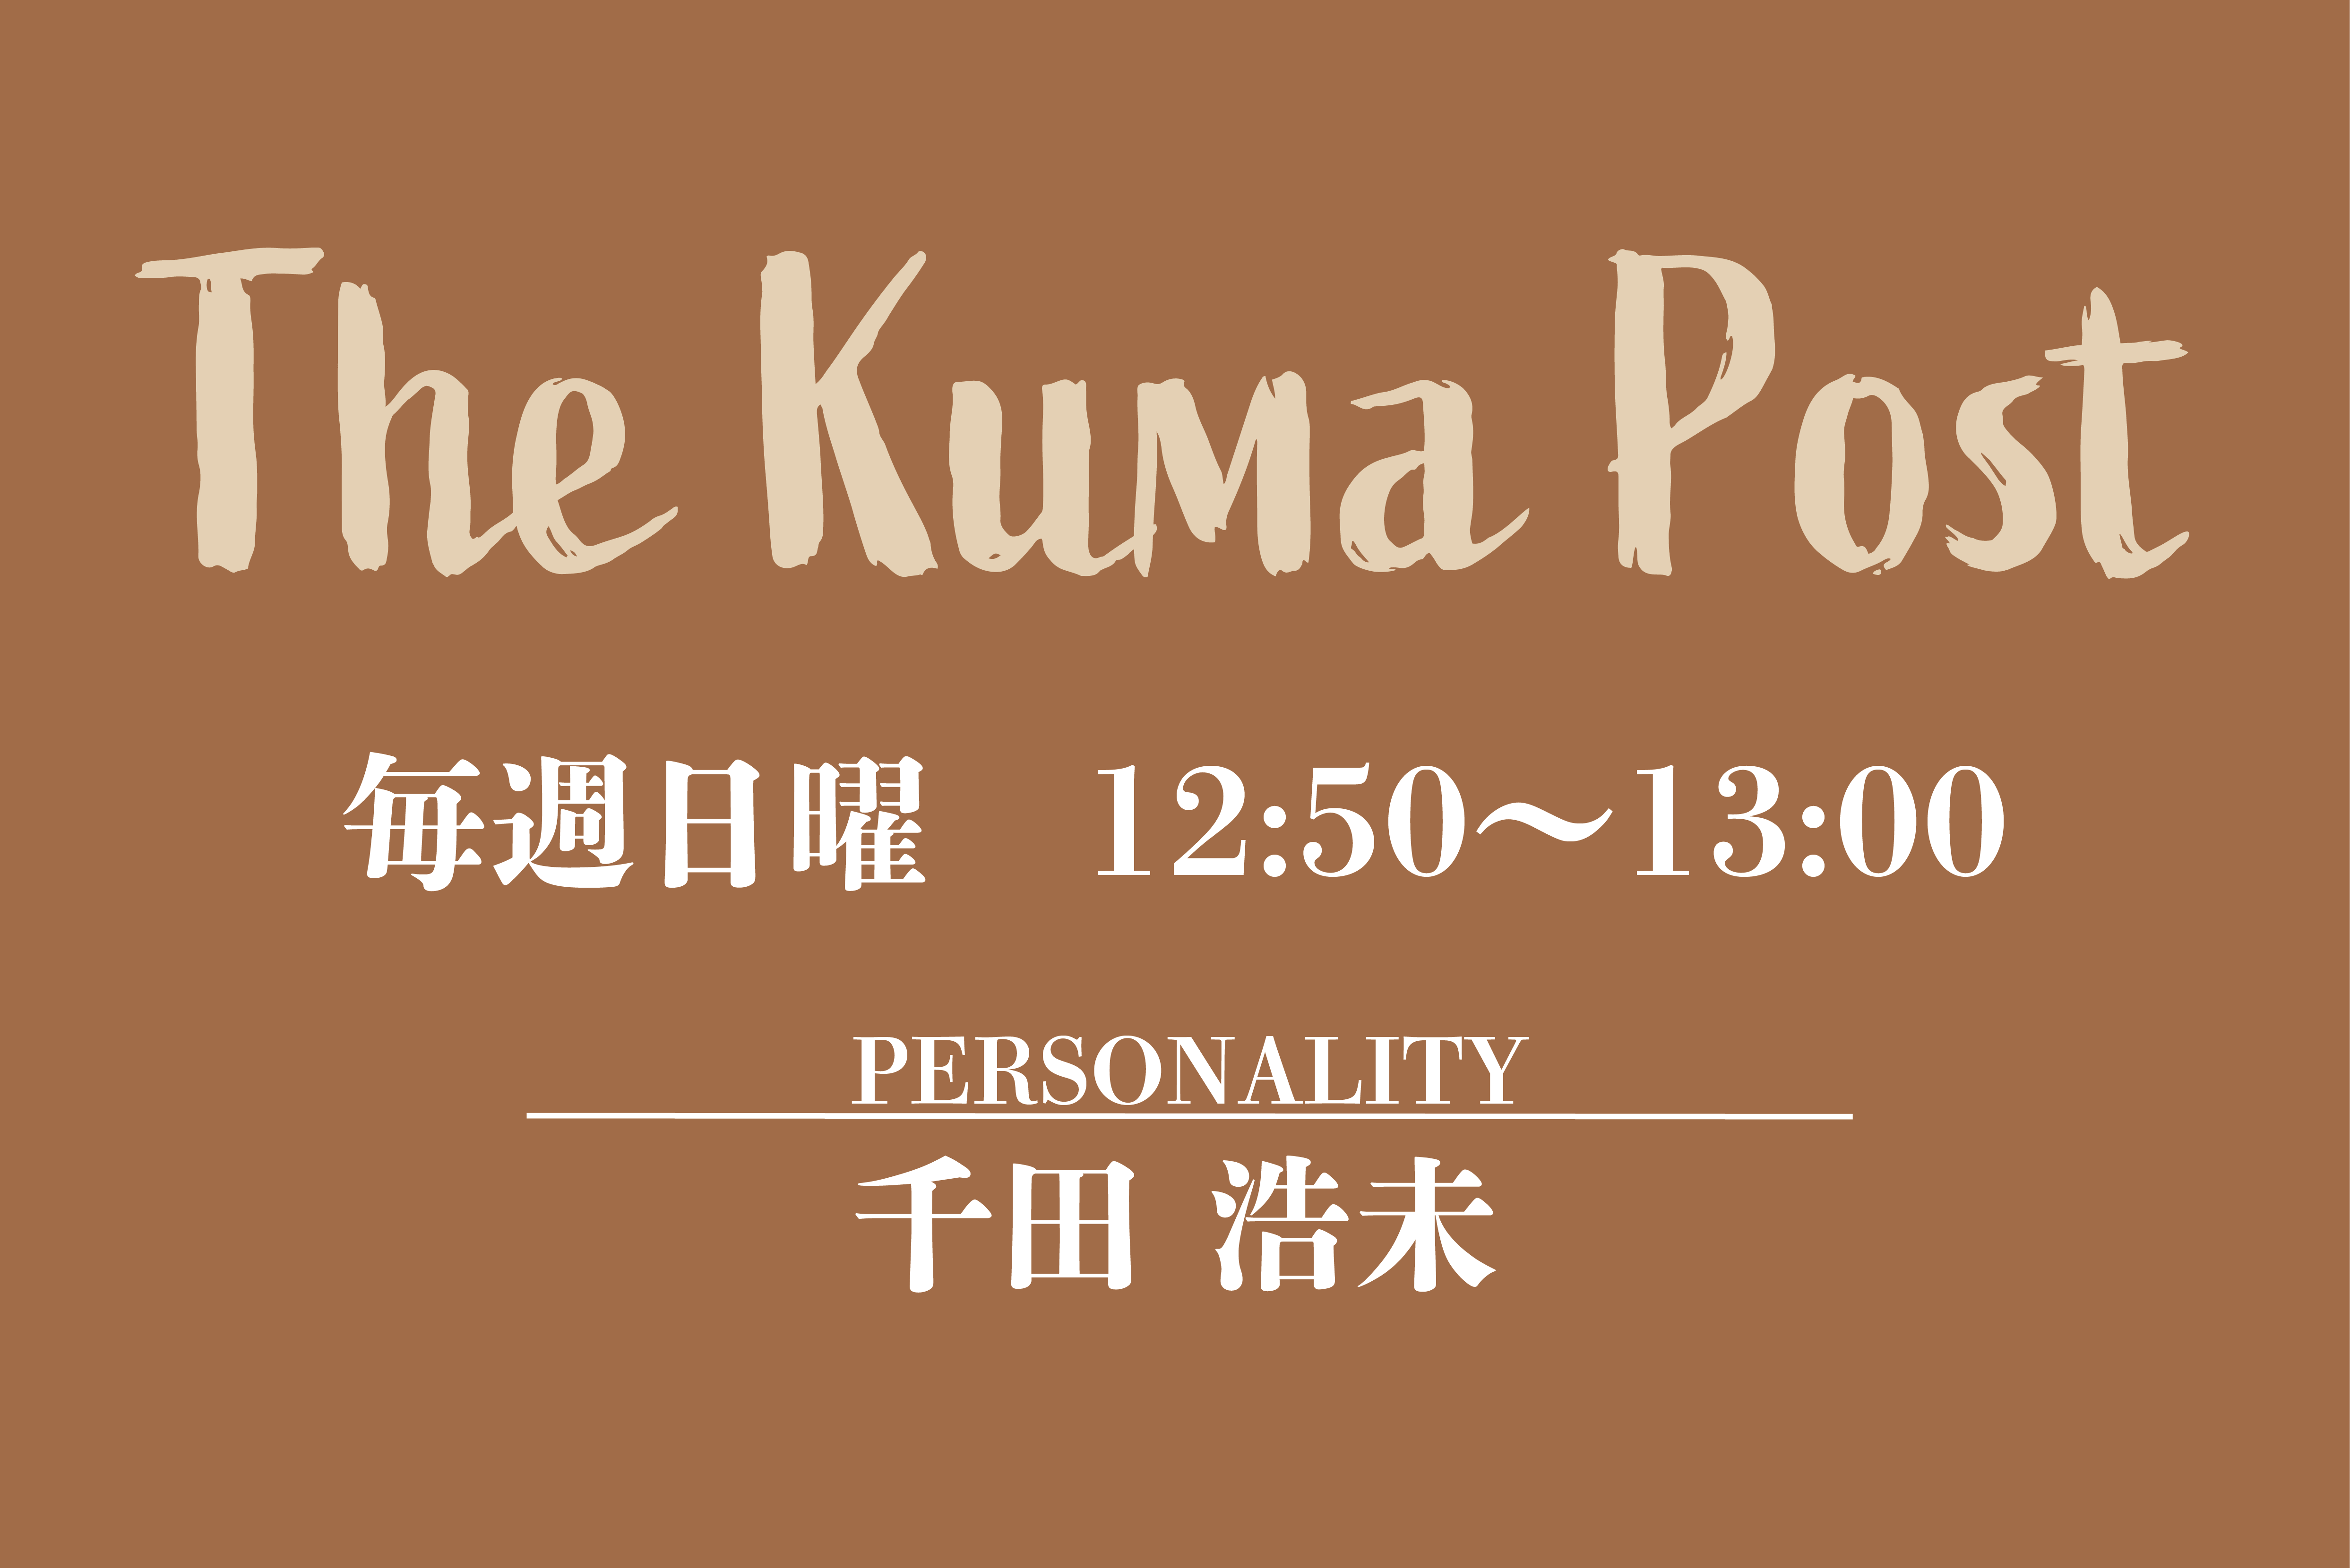 The Kuma Post